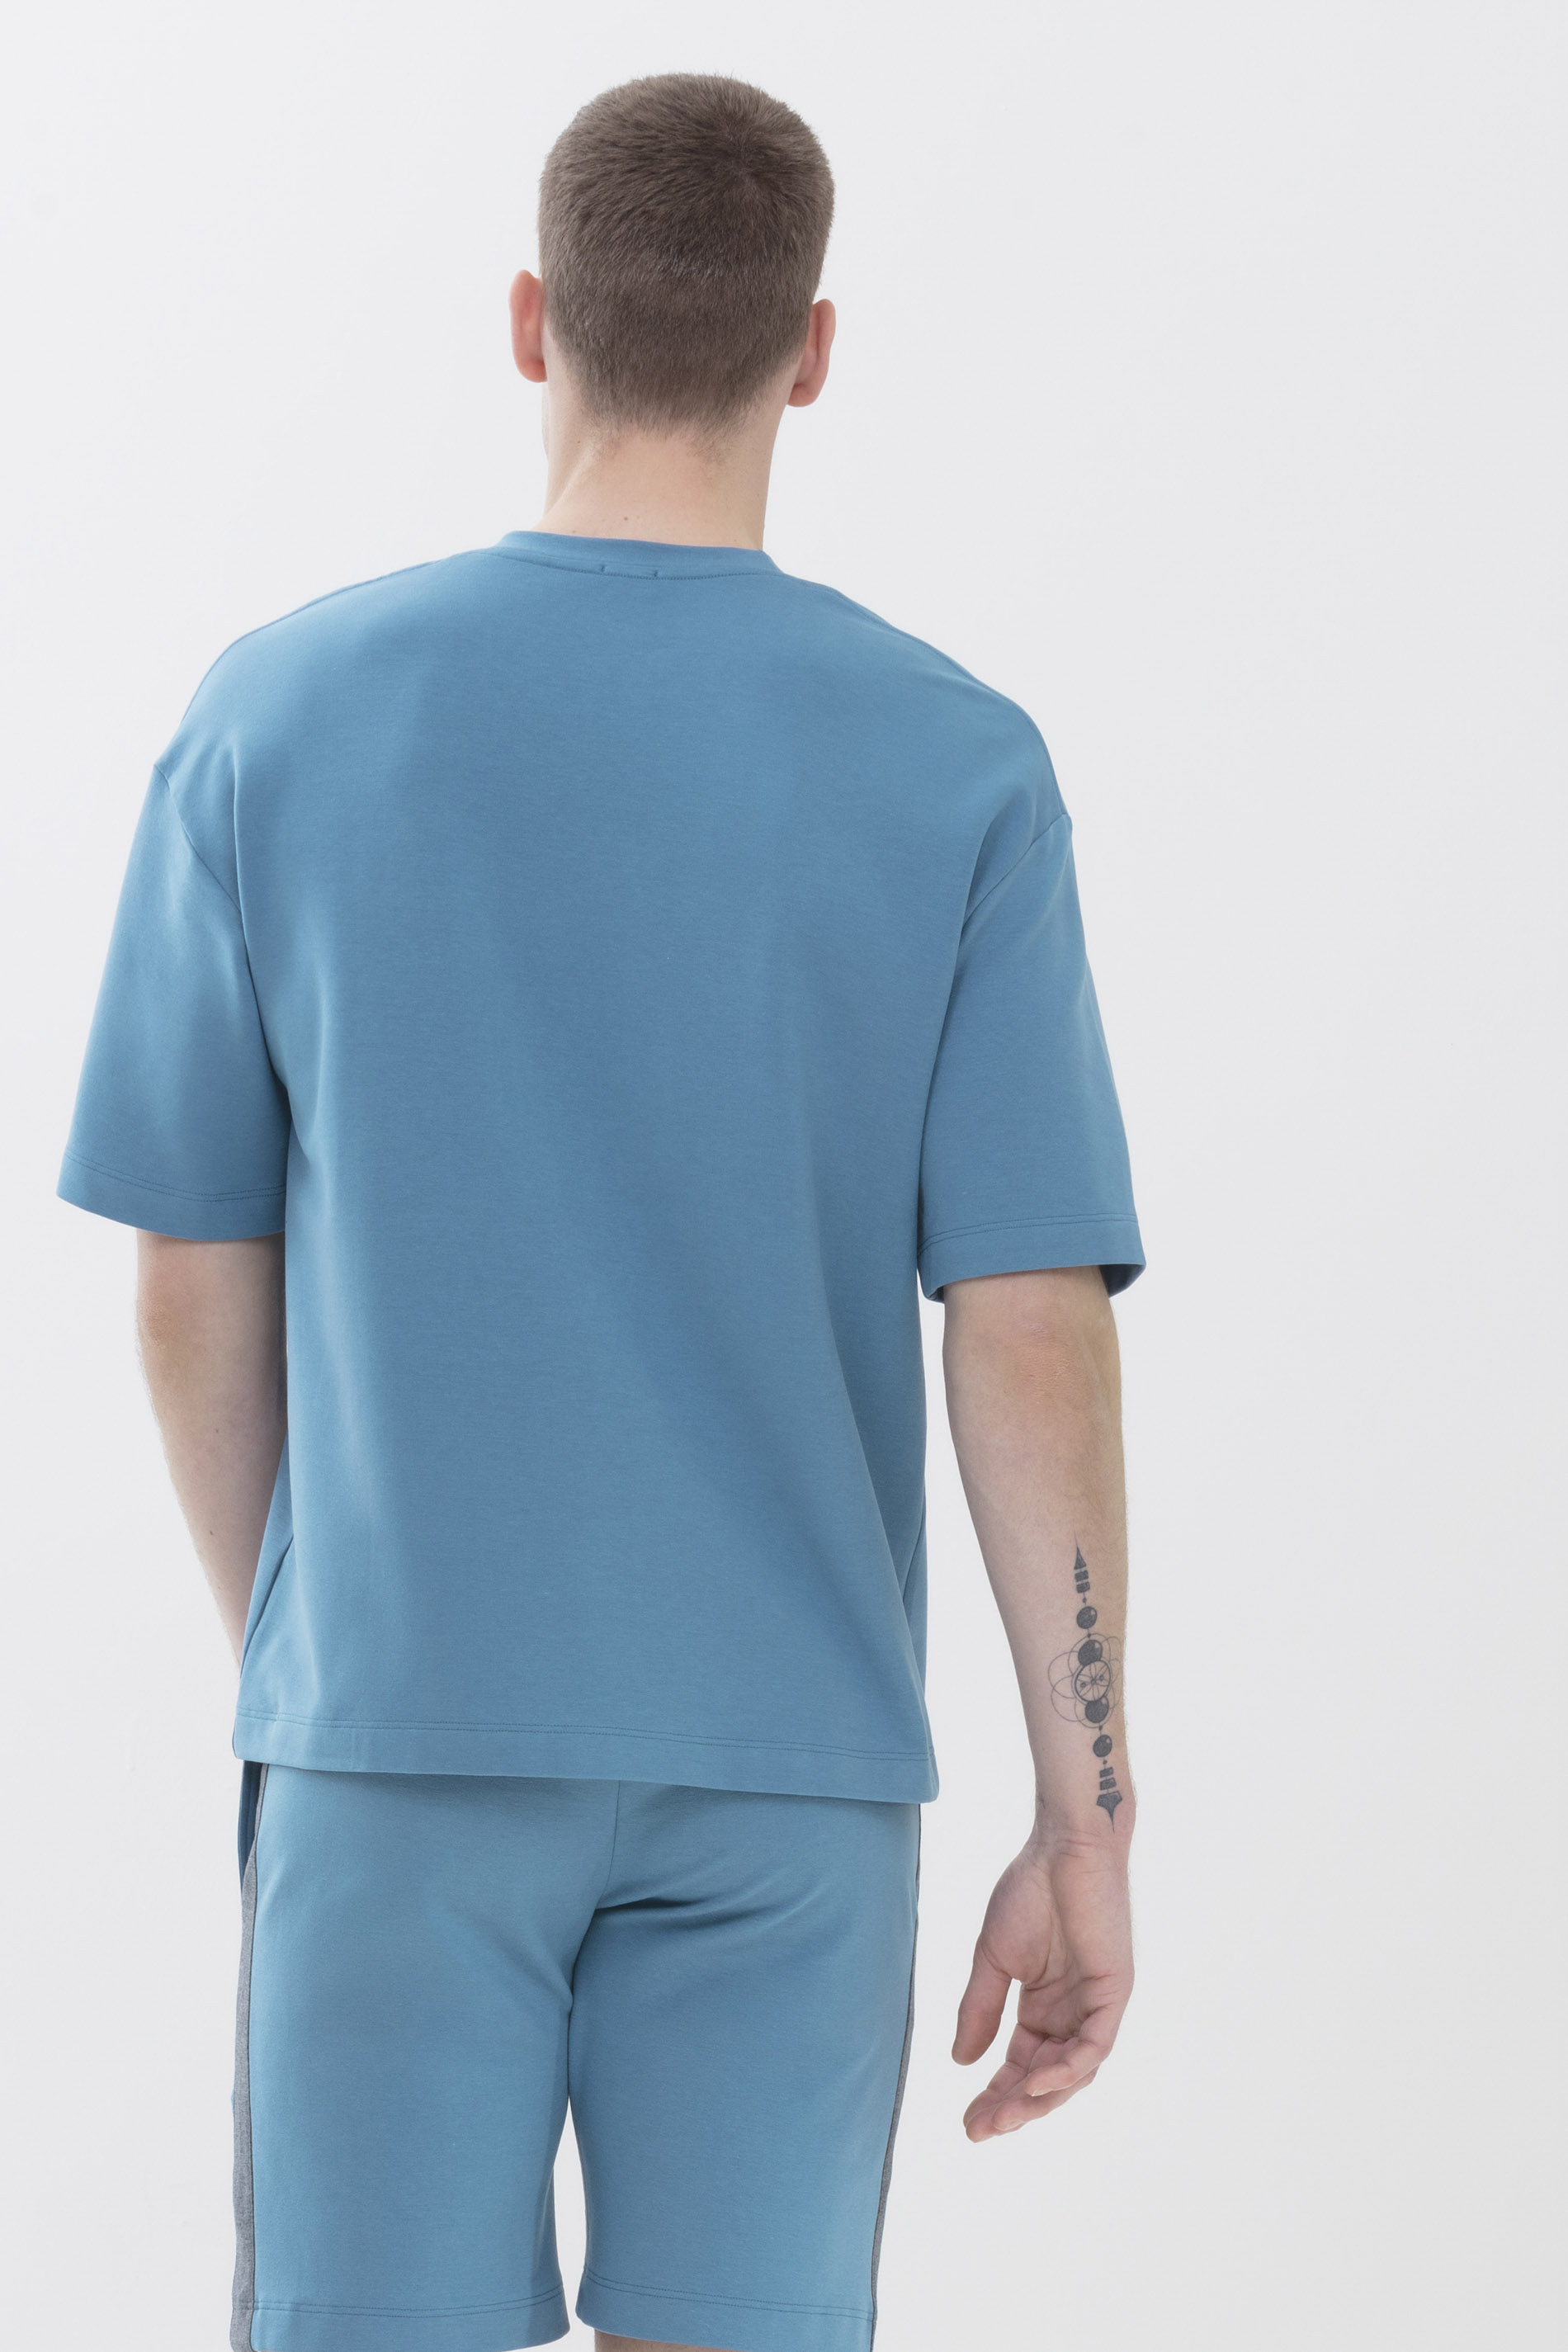 T-shirt Yale Blue Serie Enjoy Colour Achteraanzicht | mey®